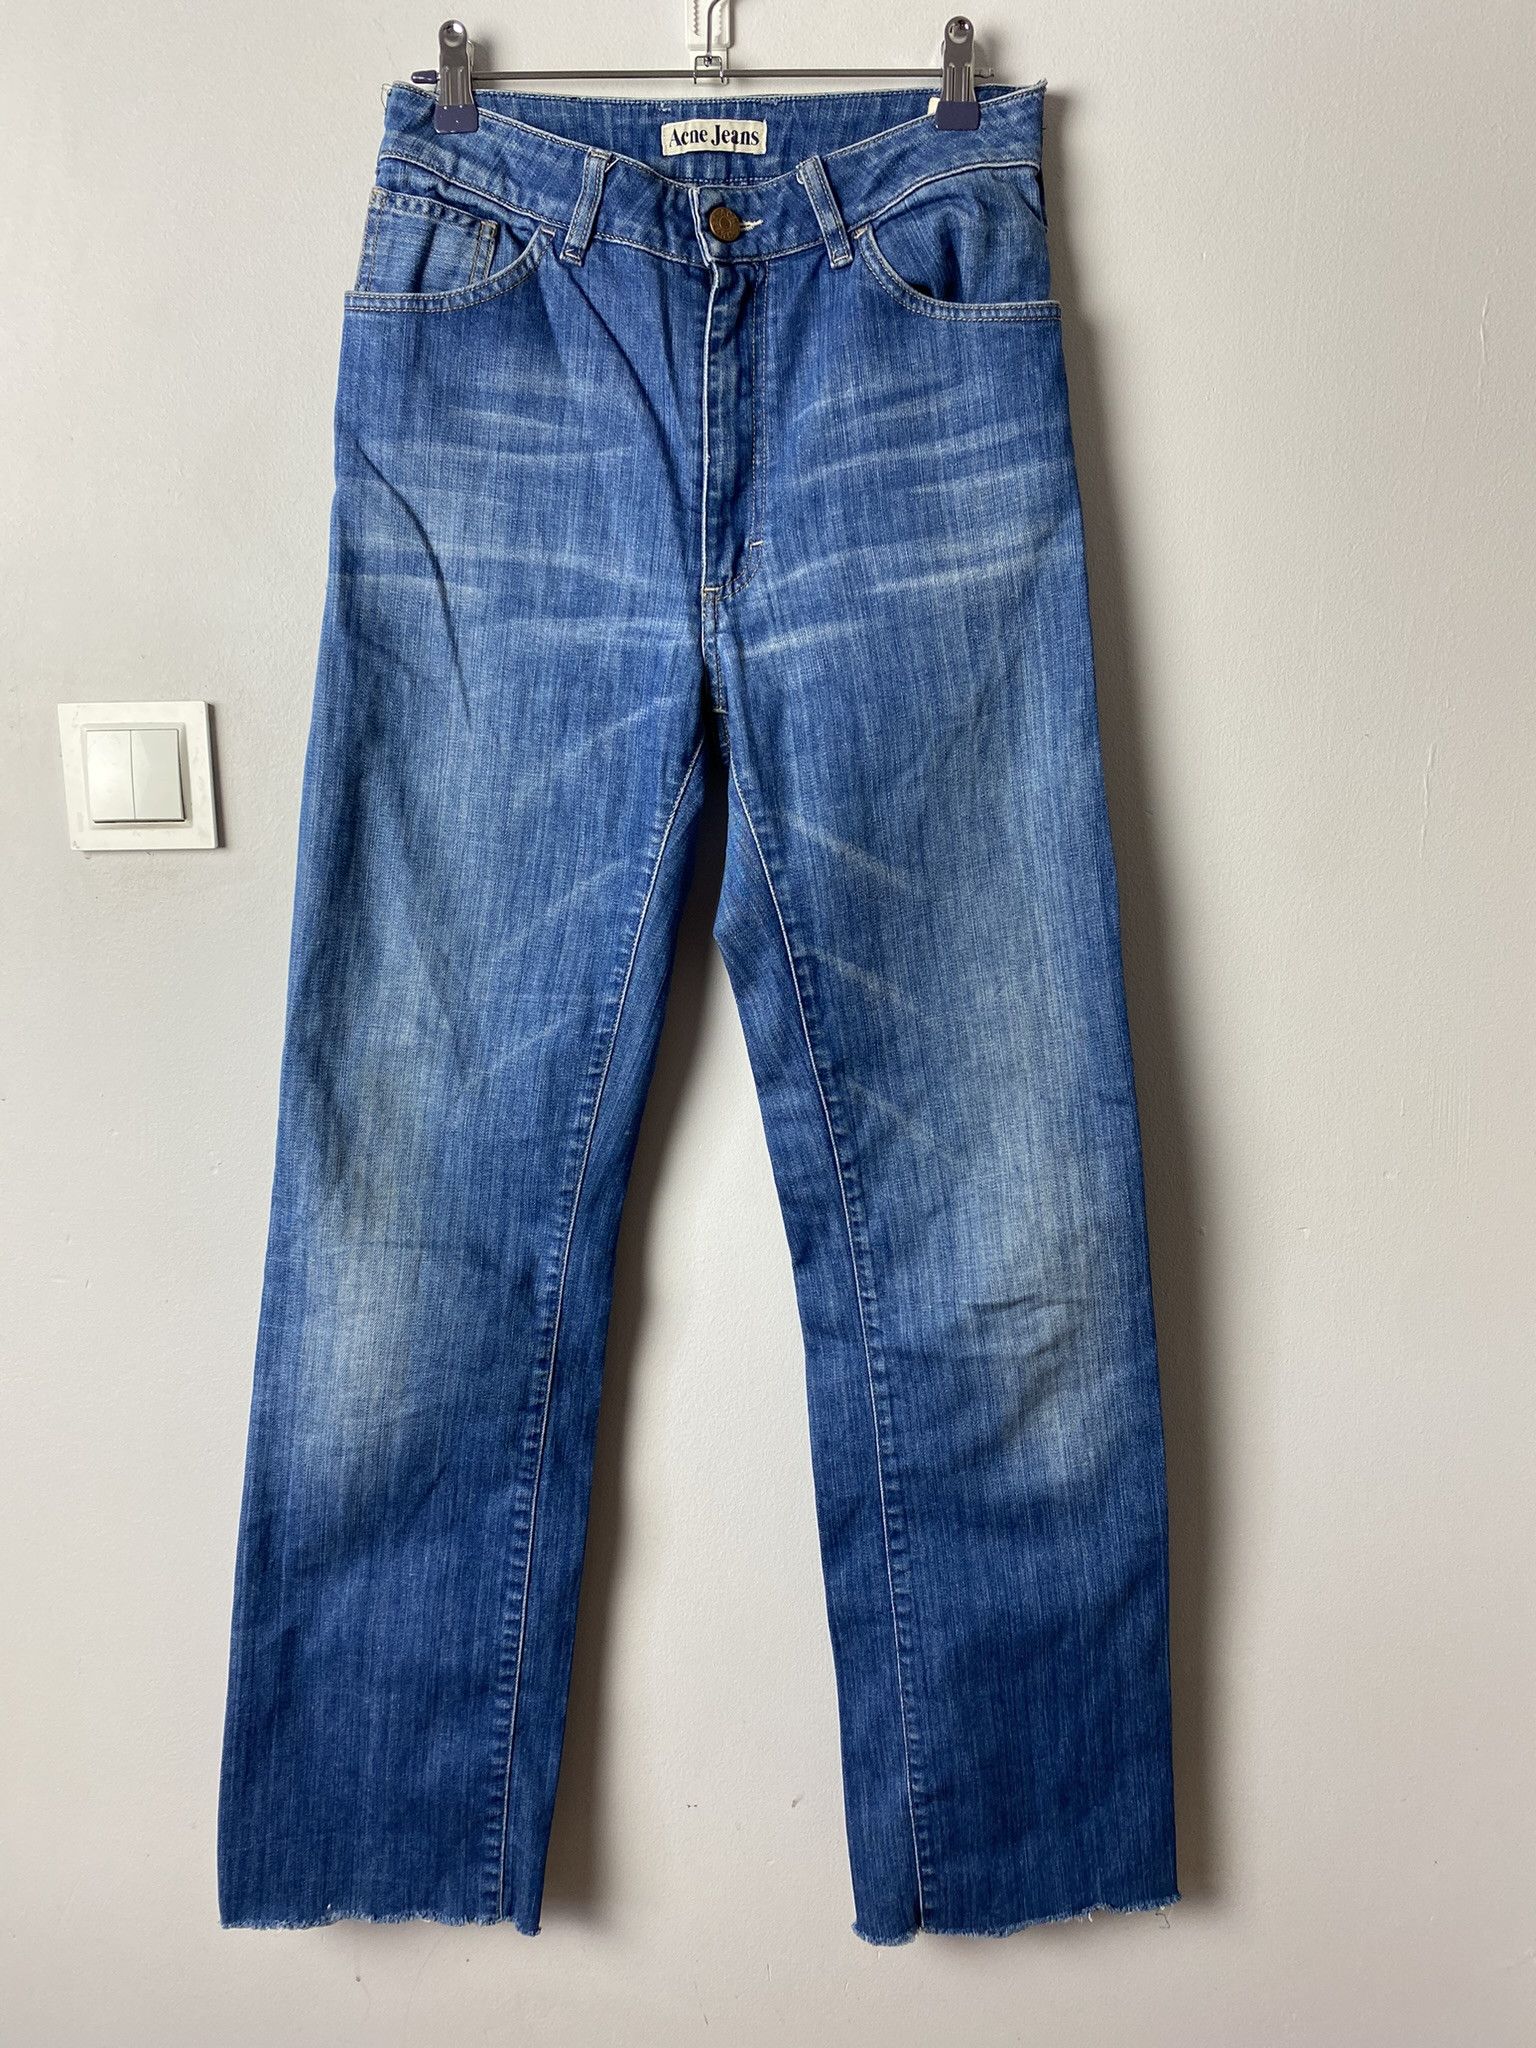 Studios Acne Jeans Tube Lena vintage pants | Grailed